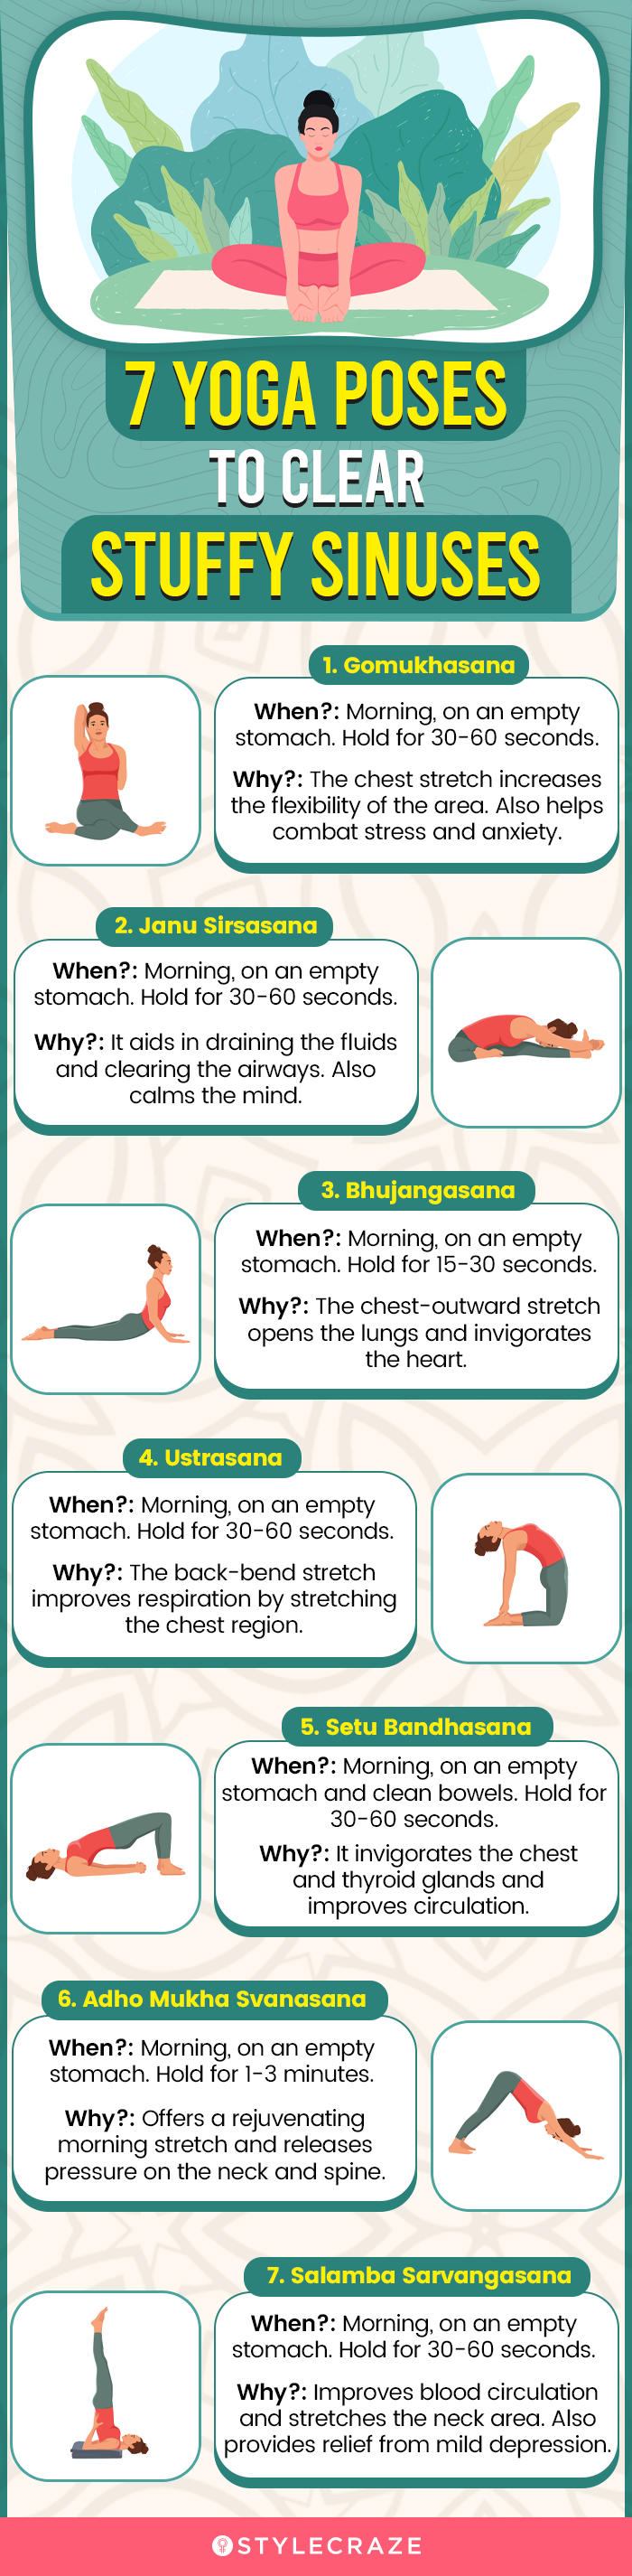 Yoga Exercises for Sinus Relief: Asanas to Improve Chronic Sinus Issues